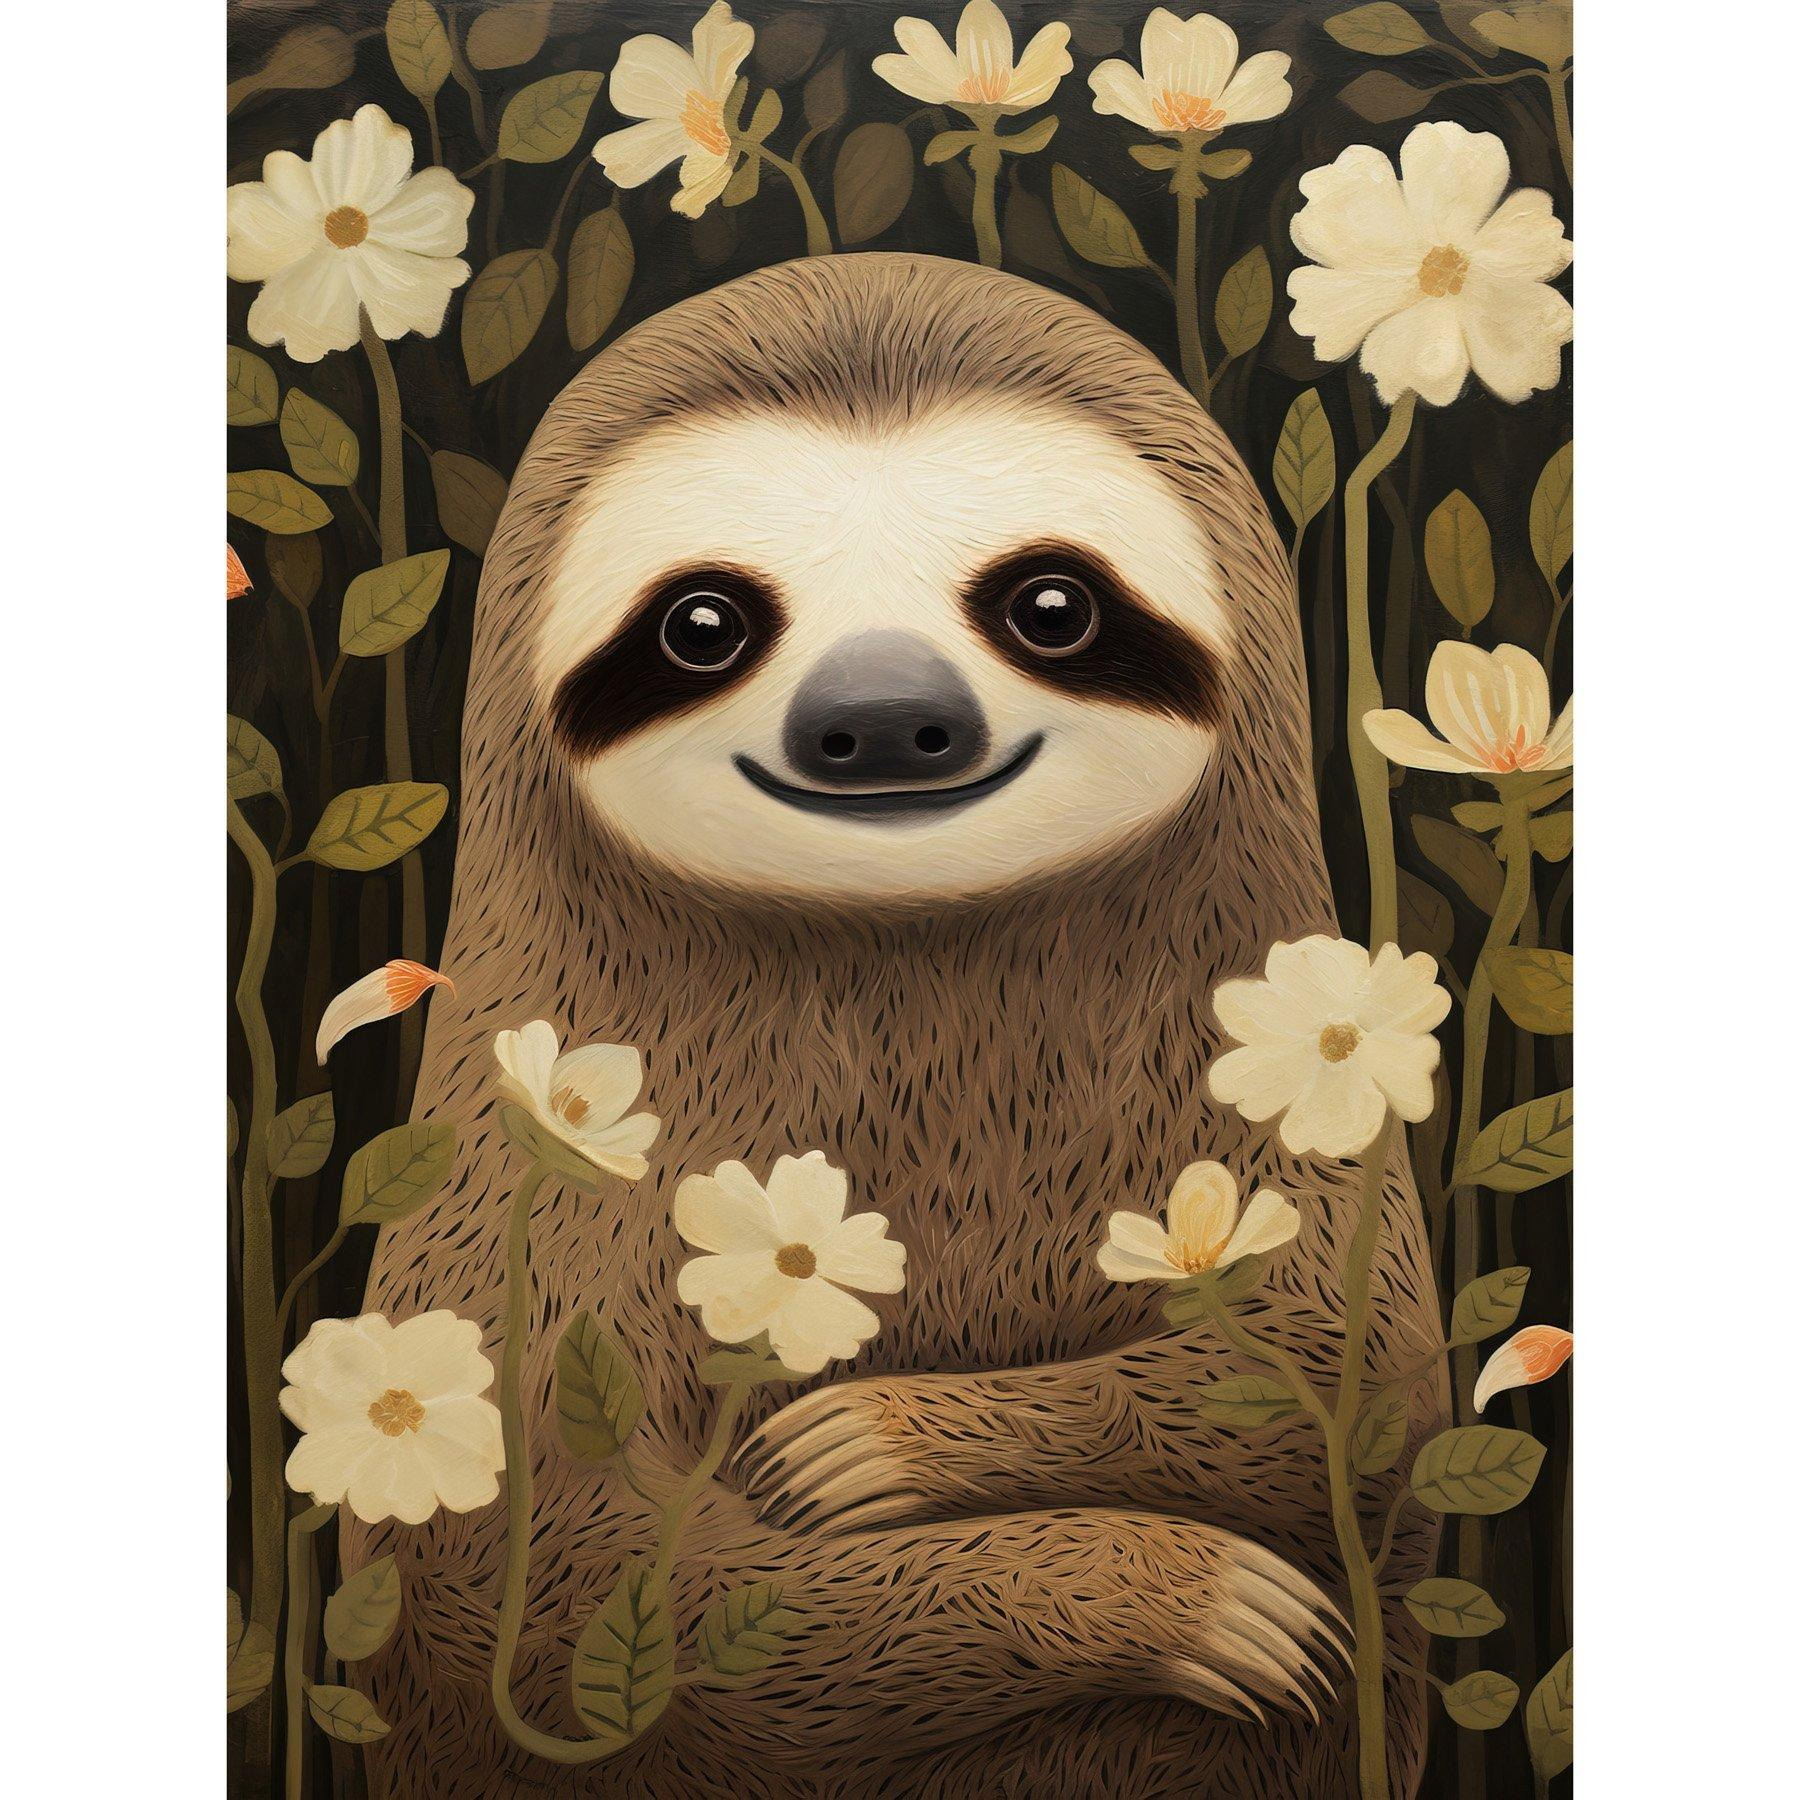 Sloth with Jasmine and Anemone Flowers Elegant Artwork Unframed Wall Art Print Poster Home Decor Premium - image 1